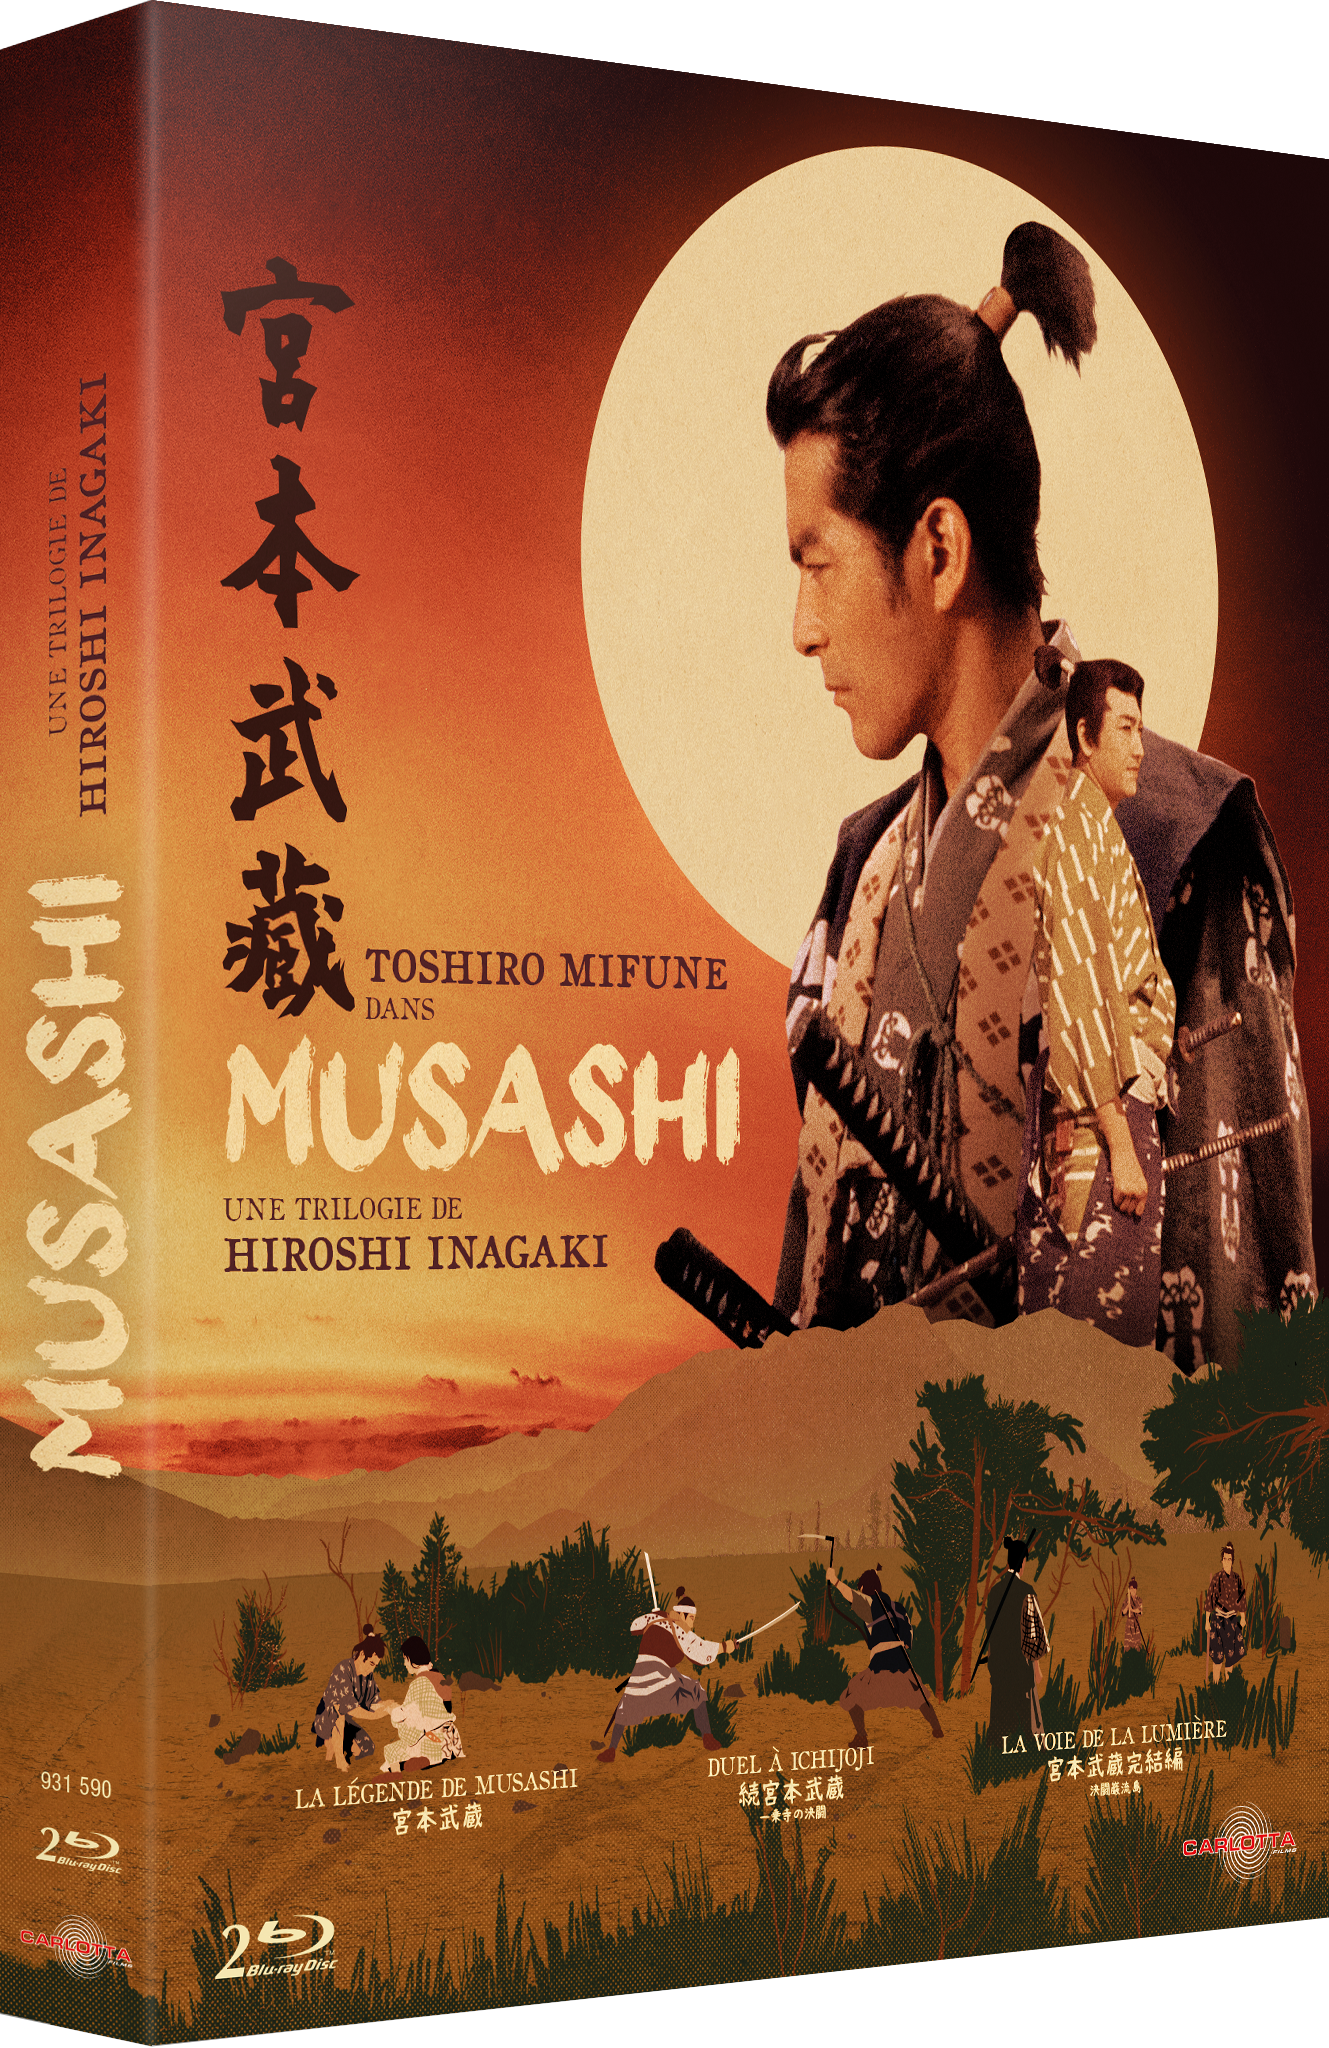 Musashi by Hiroshi Inagaki